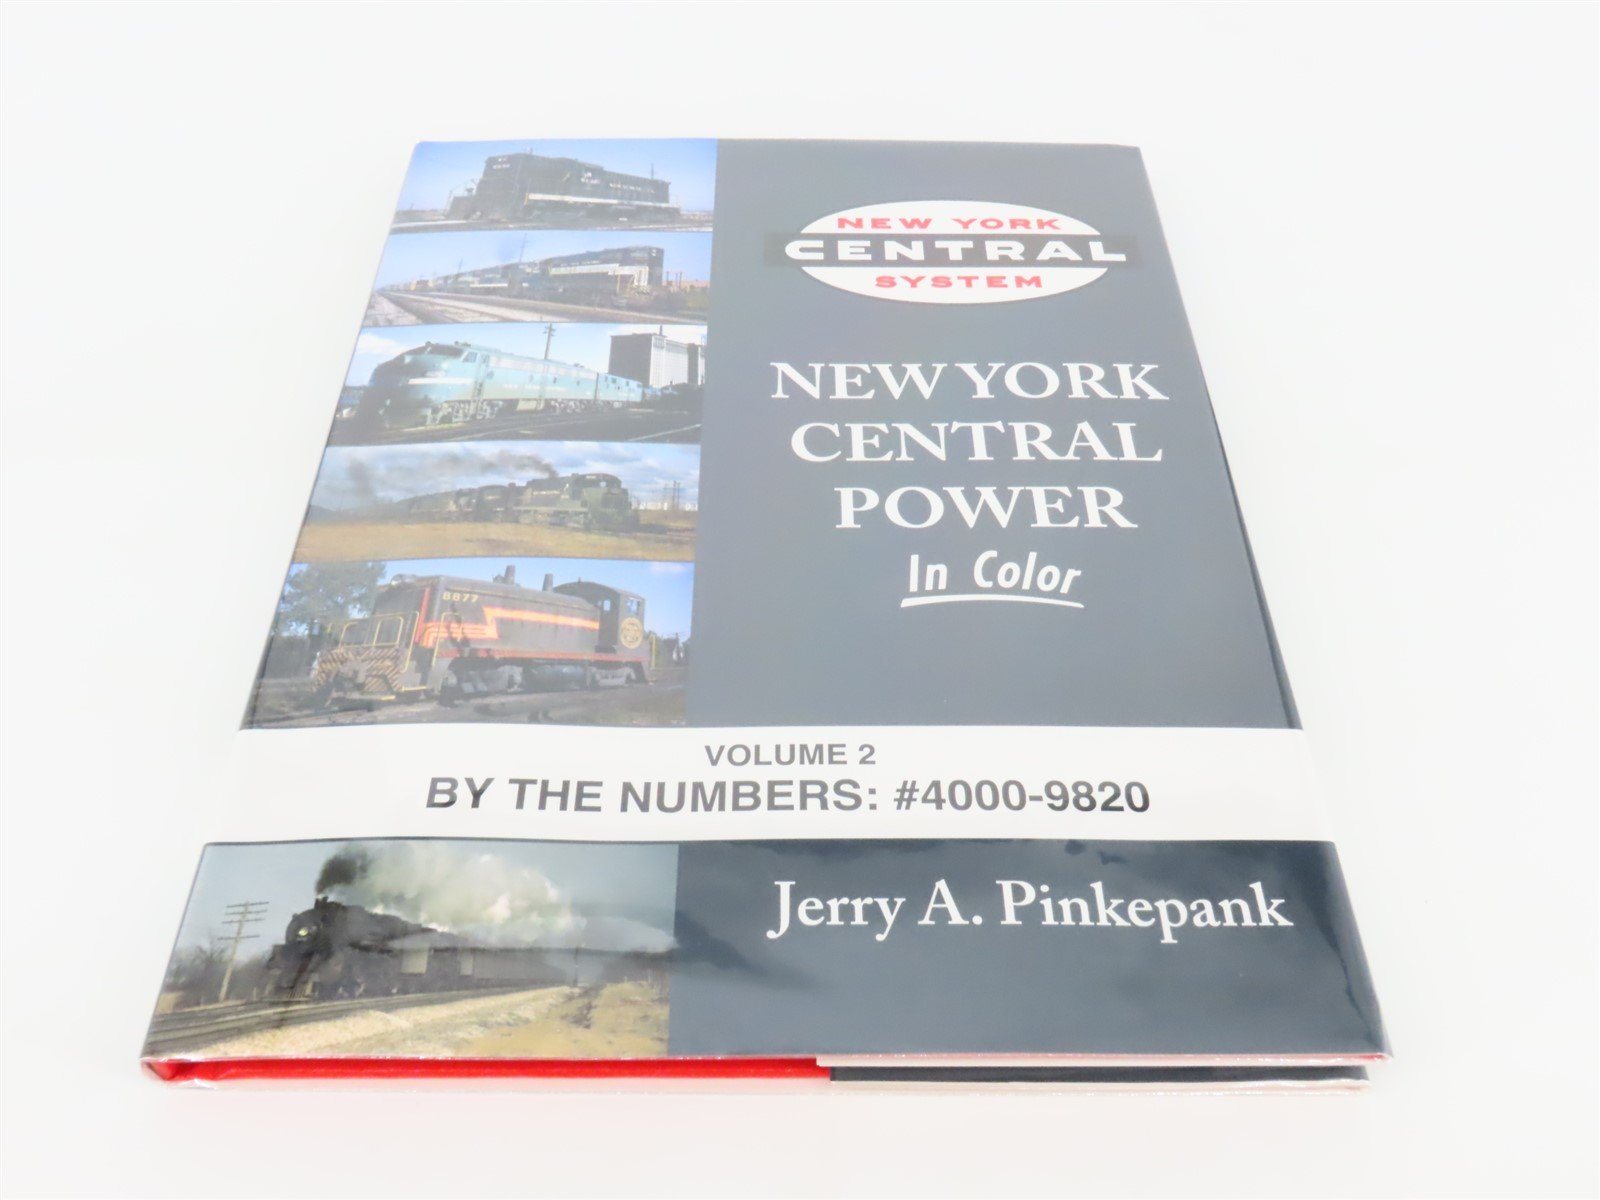 Morning Sun: New York Central Power Volume 2 by Jerry A. Pinkepank ©2016 HC Book